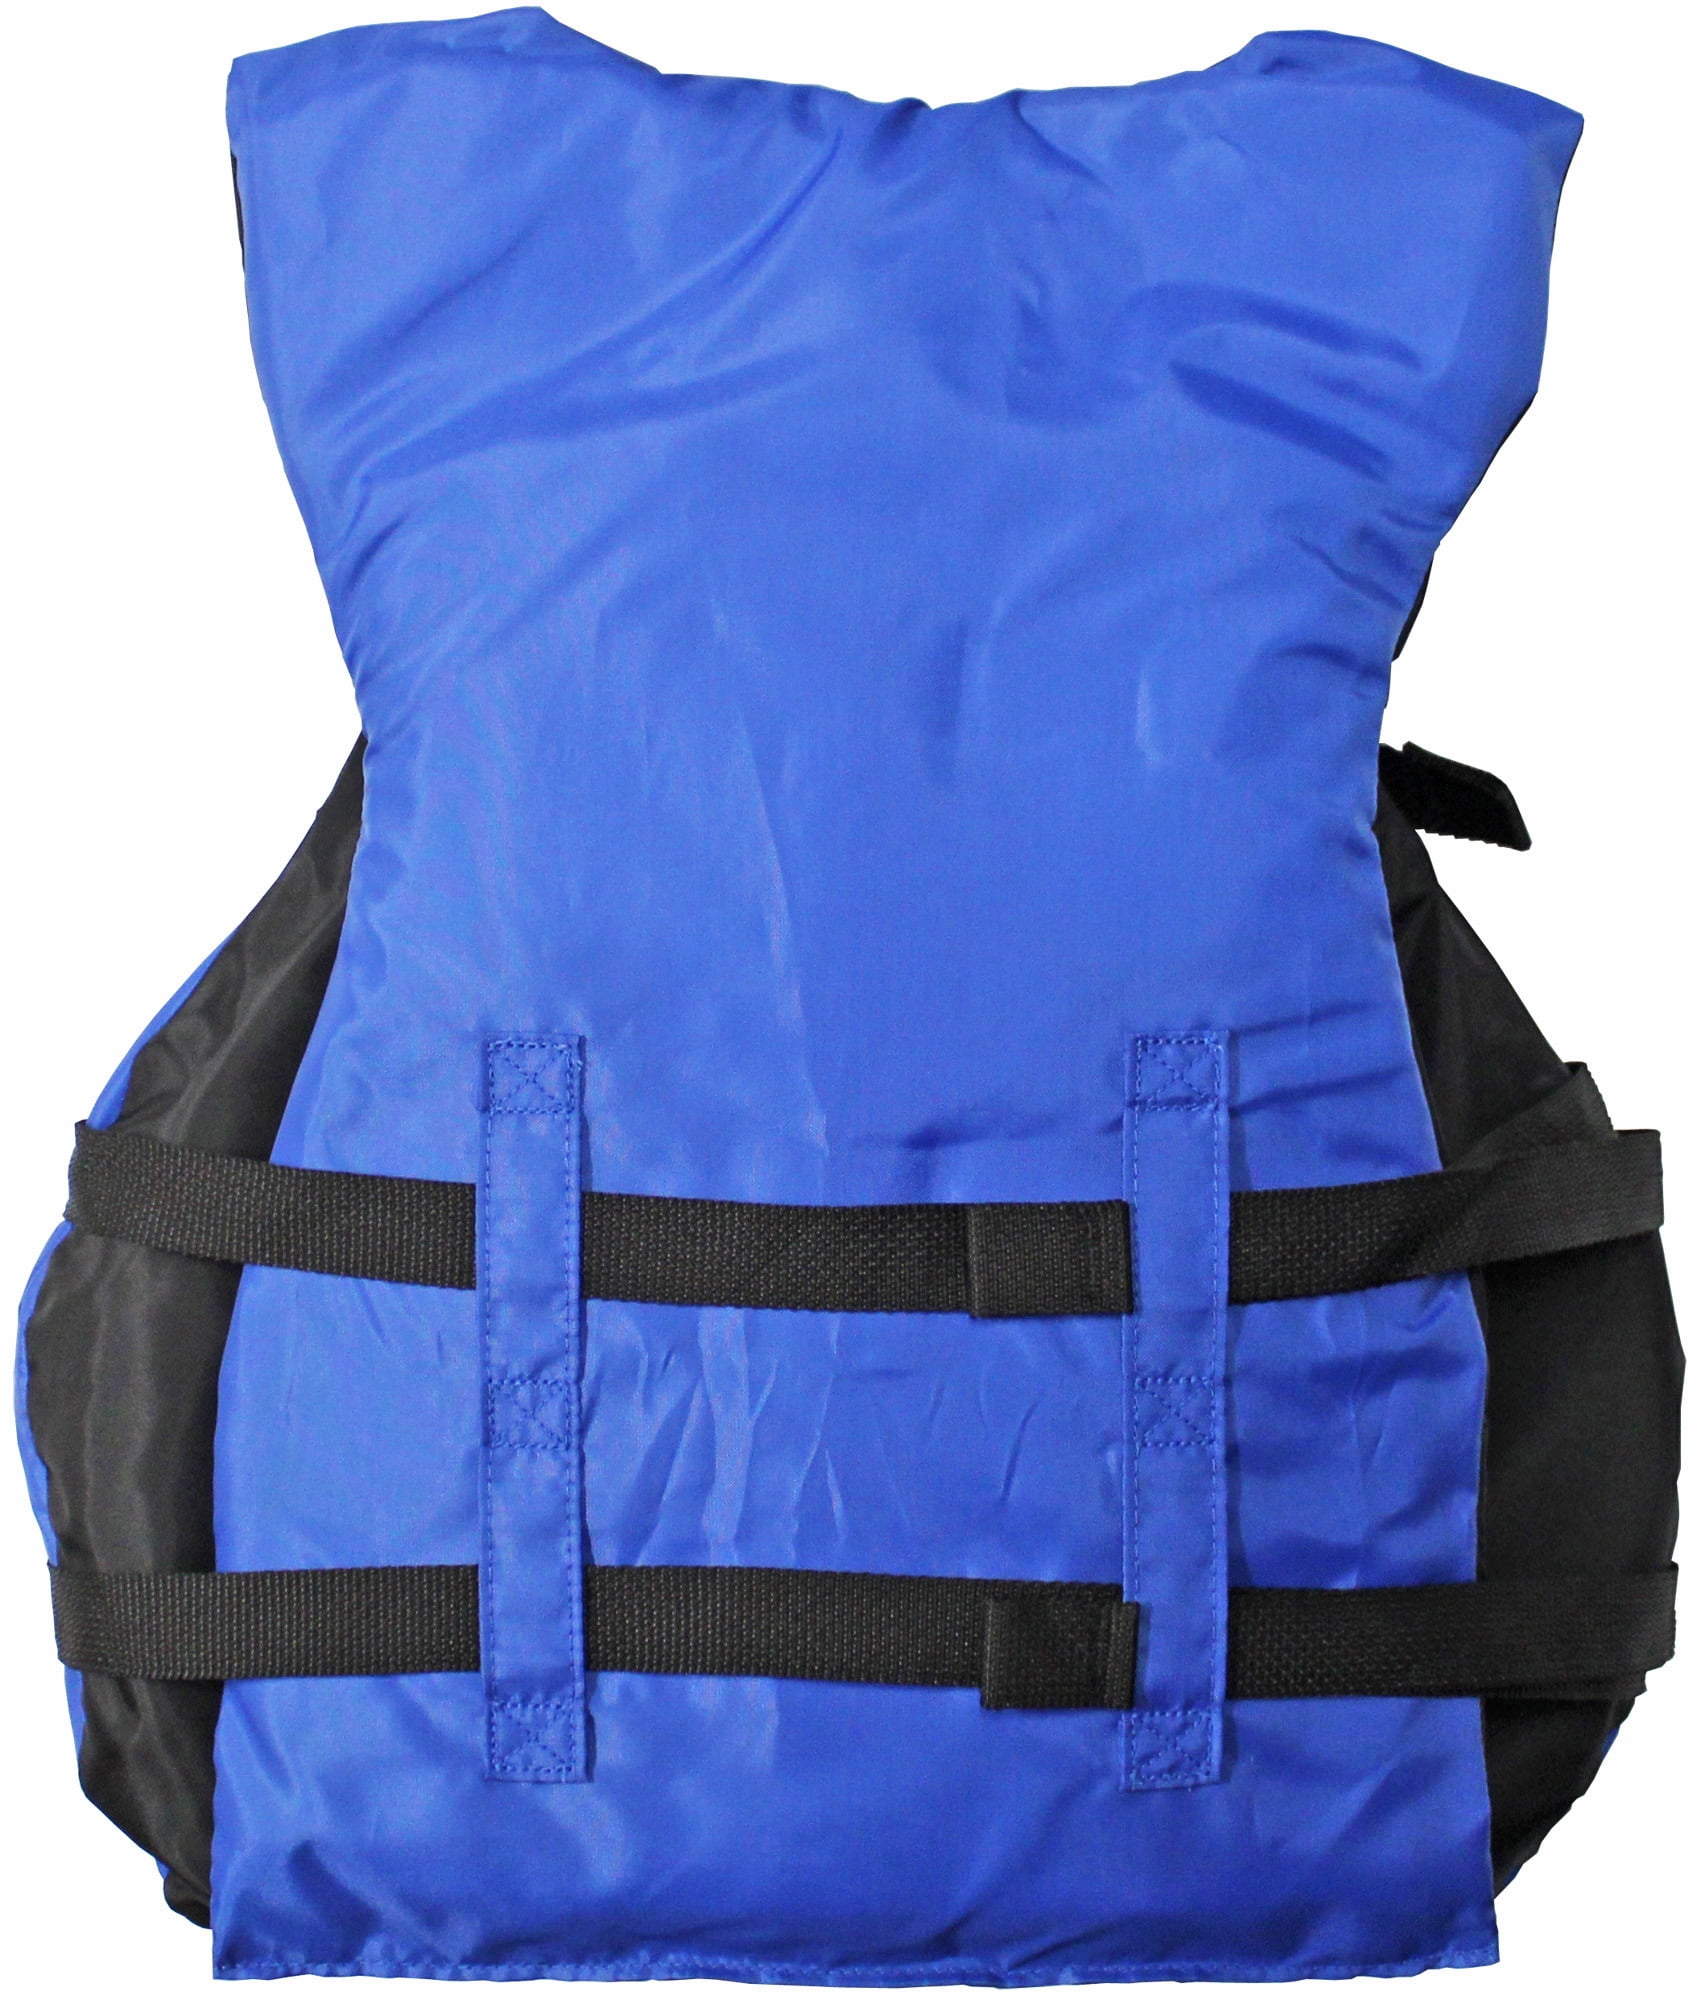  Guide Gear Universal Adult Life Vest Jacket, Kayak  Accessories, Fishing, Swim, Sailing, Type III, Blue/Black, Universal :  Sports & Outdoors